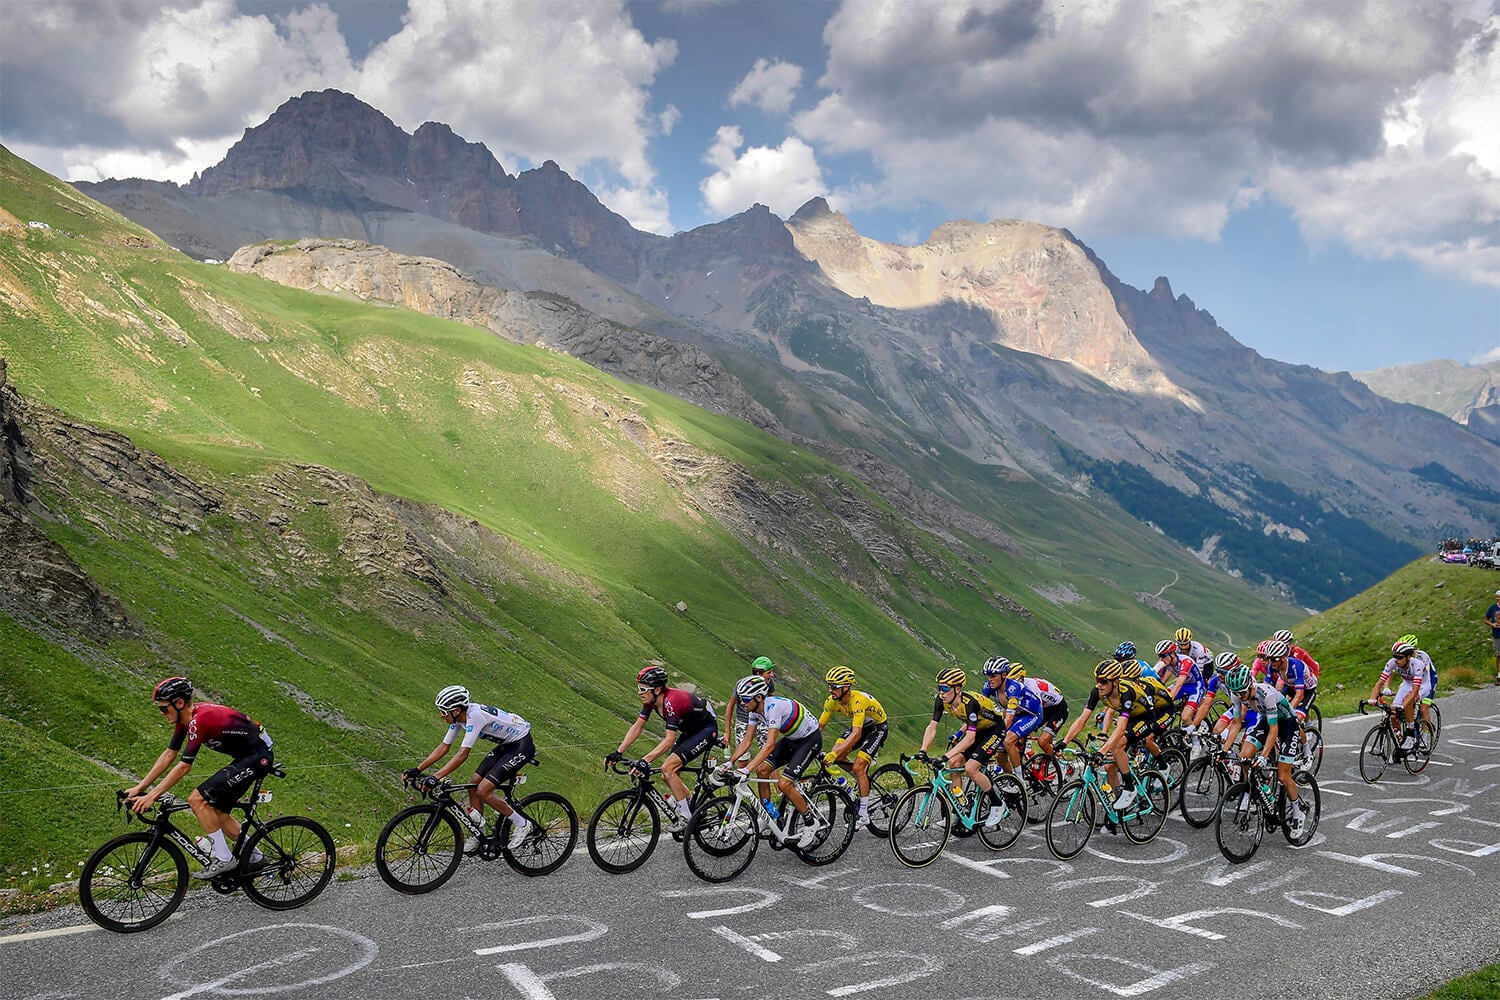 Riding at Altitude at the Tour de France road bike race